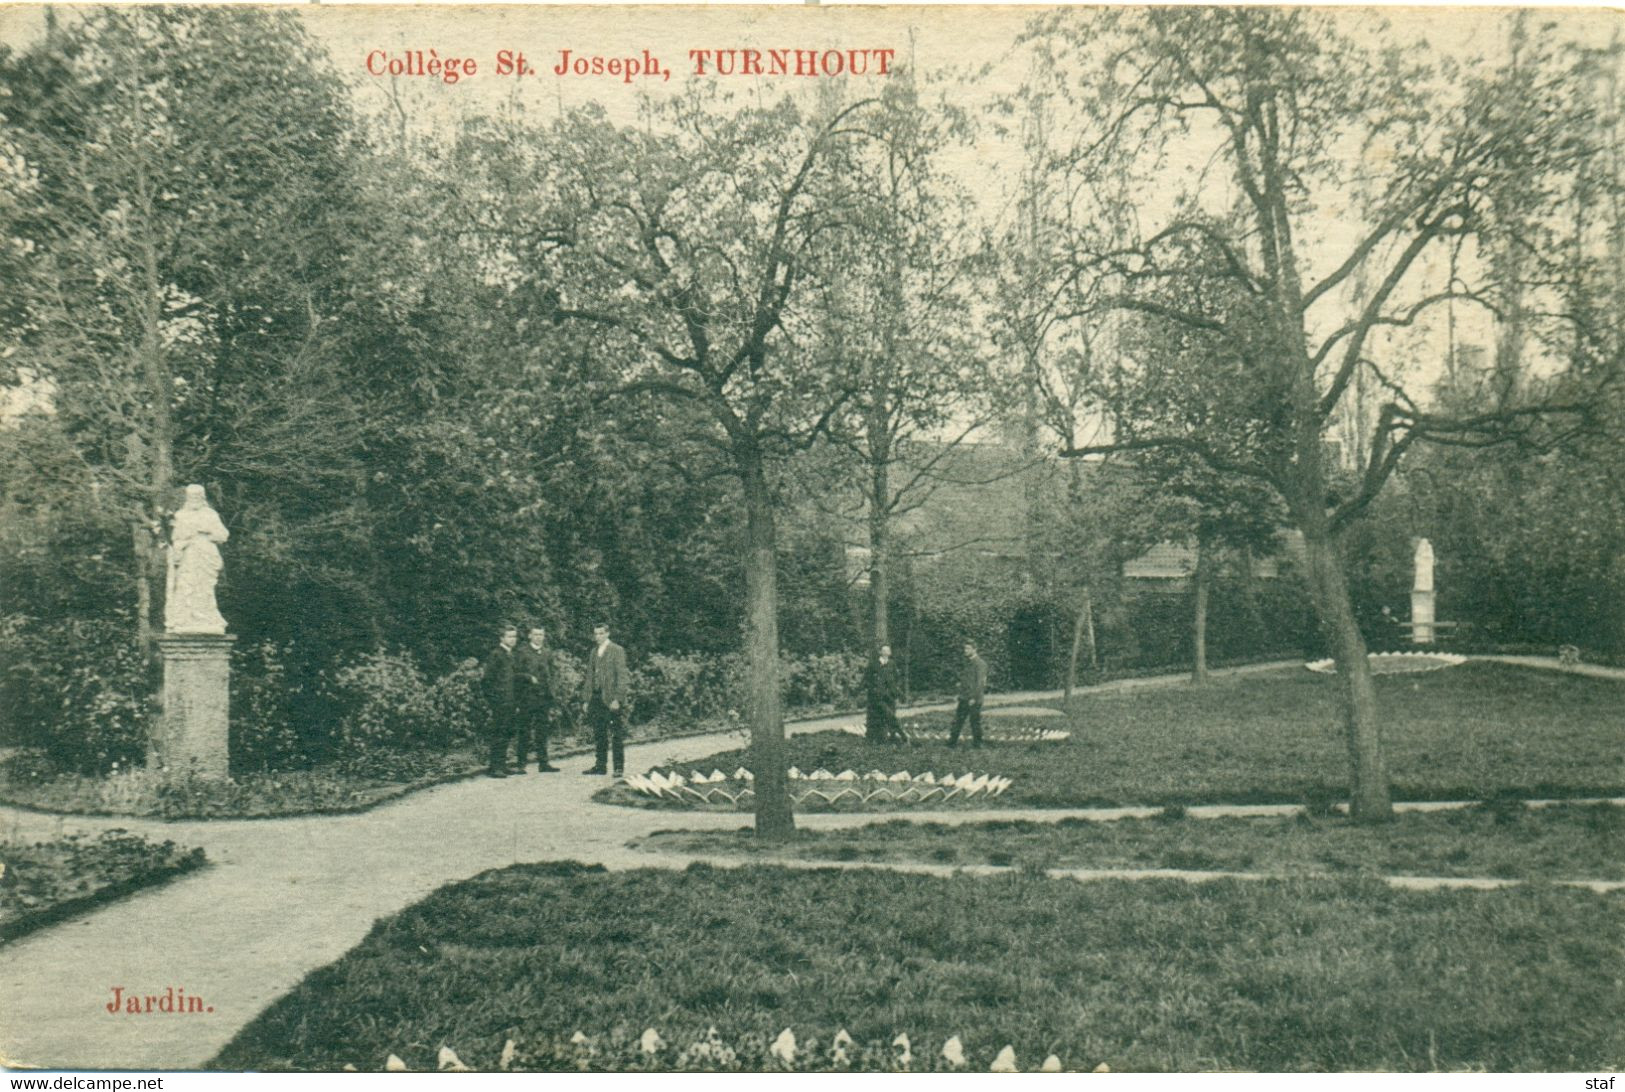 Turnhout : Collège St Joseph - Jardin : 1909 - Turnhout